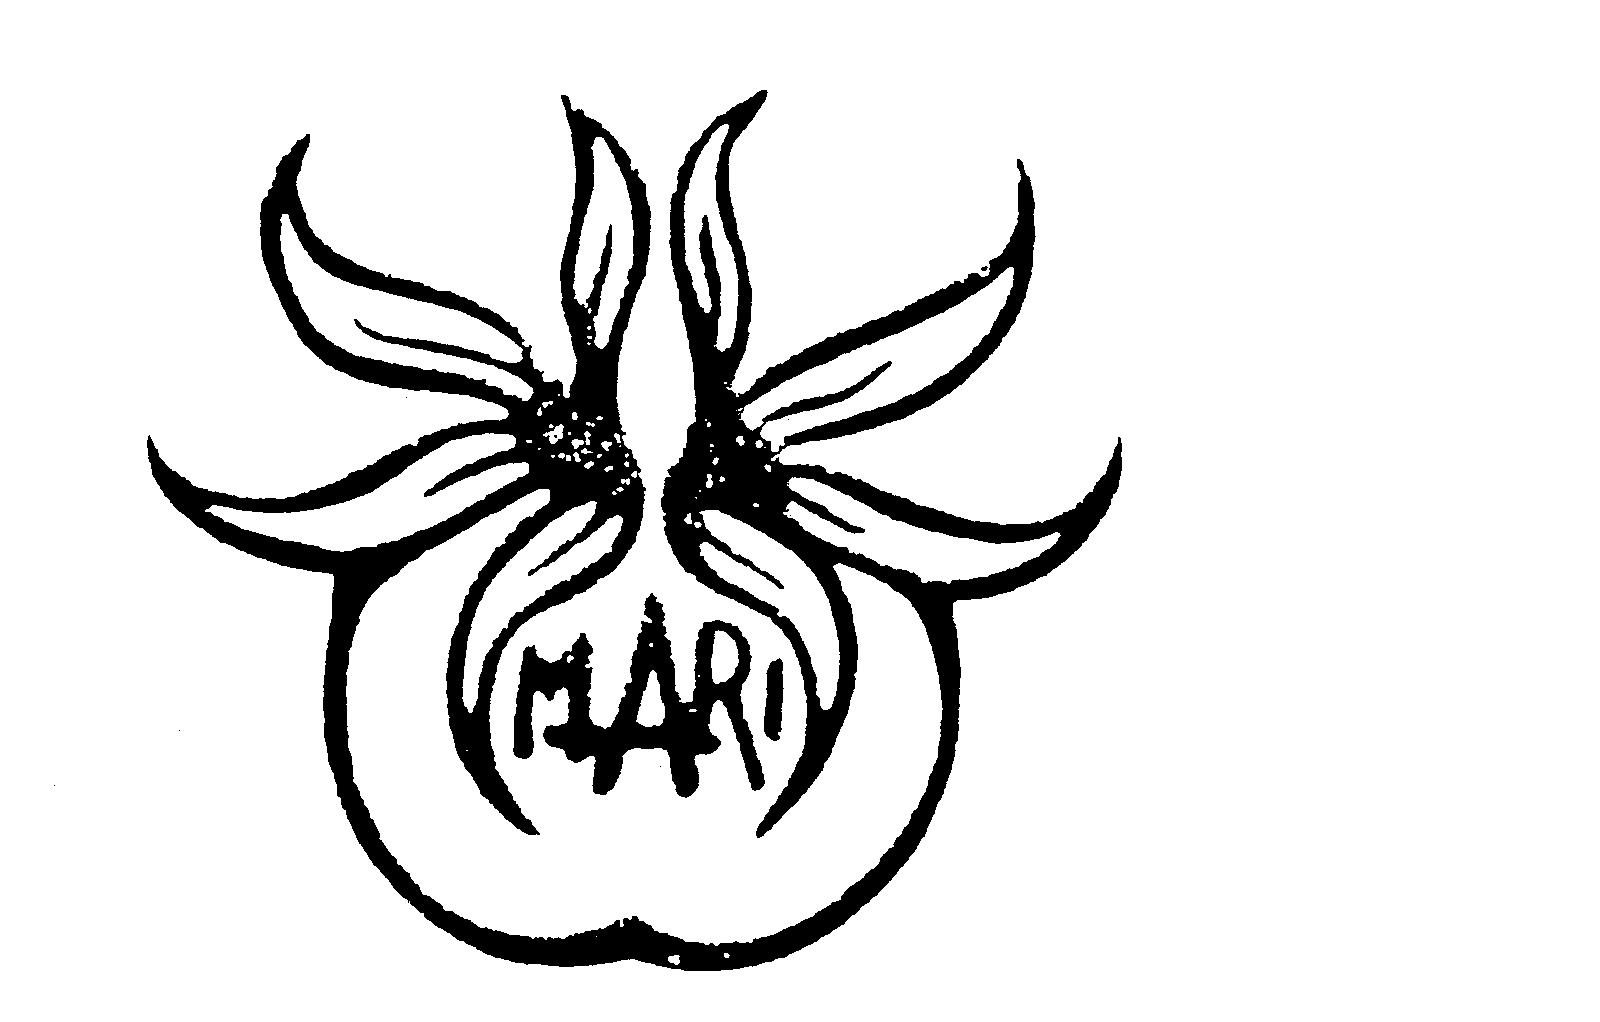 Trademark Logo MARI